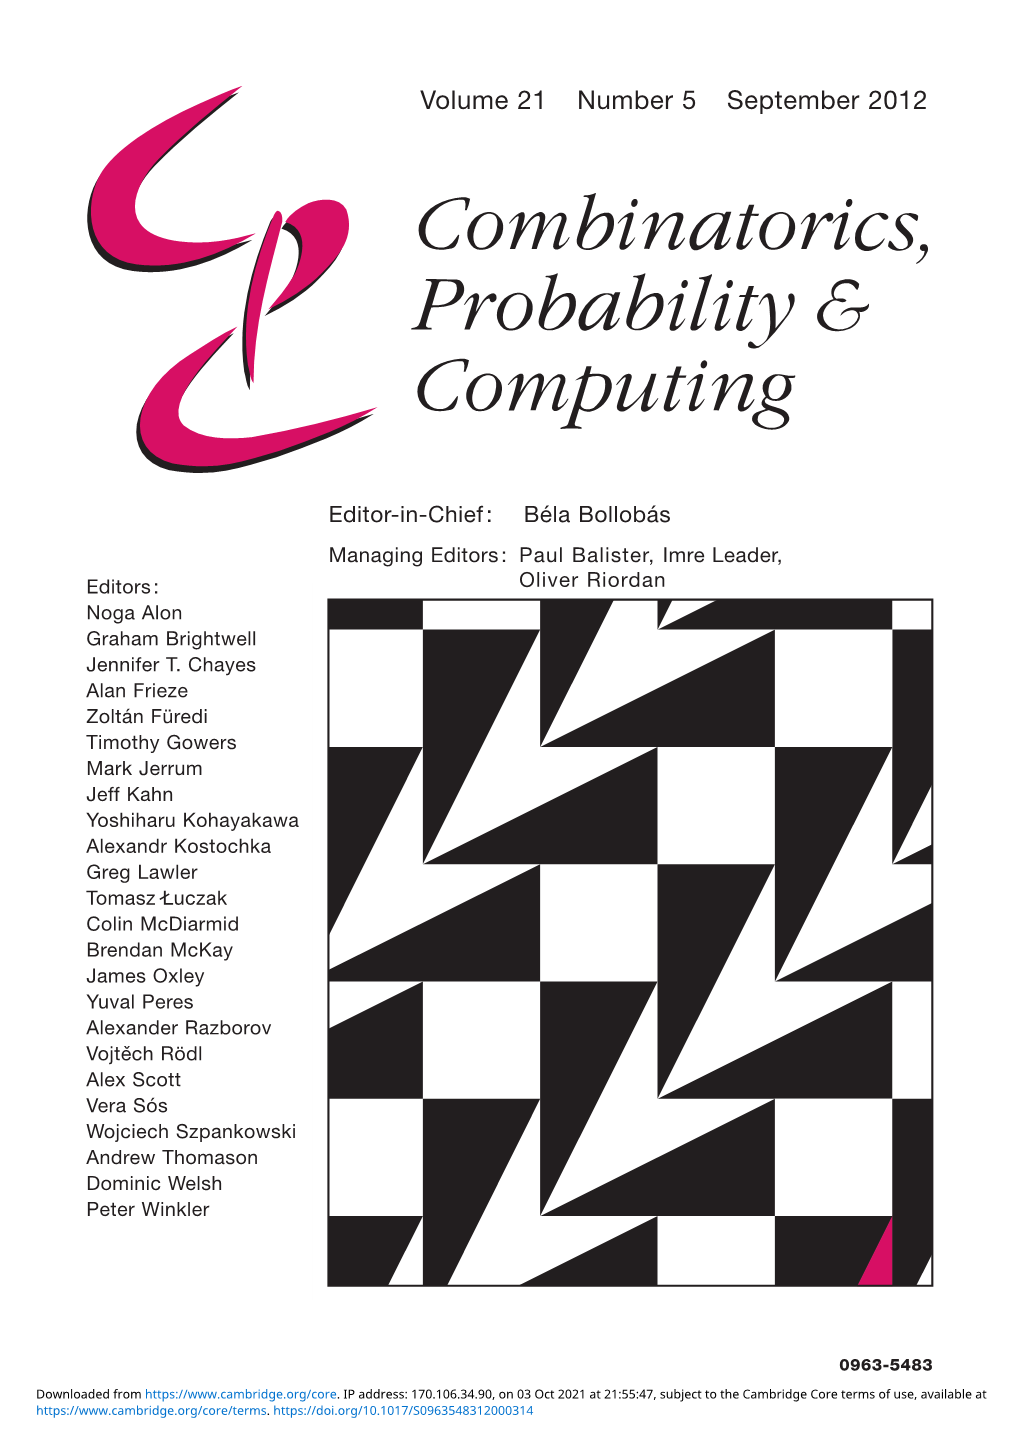 Volume 21 Number 5 September 2012 Combinatorics, Probability & Computing Volume 21 Number 5 September 2012